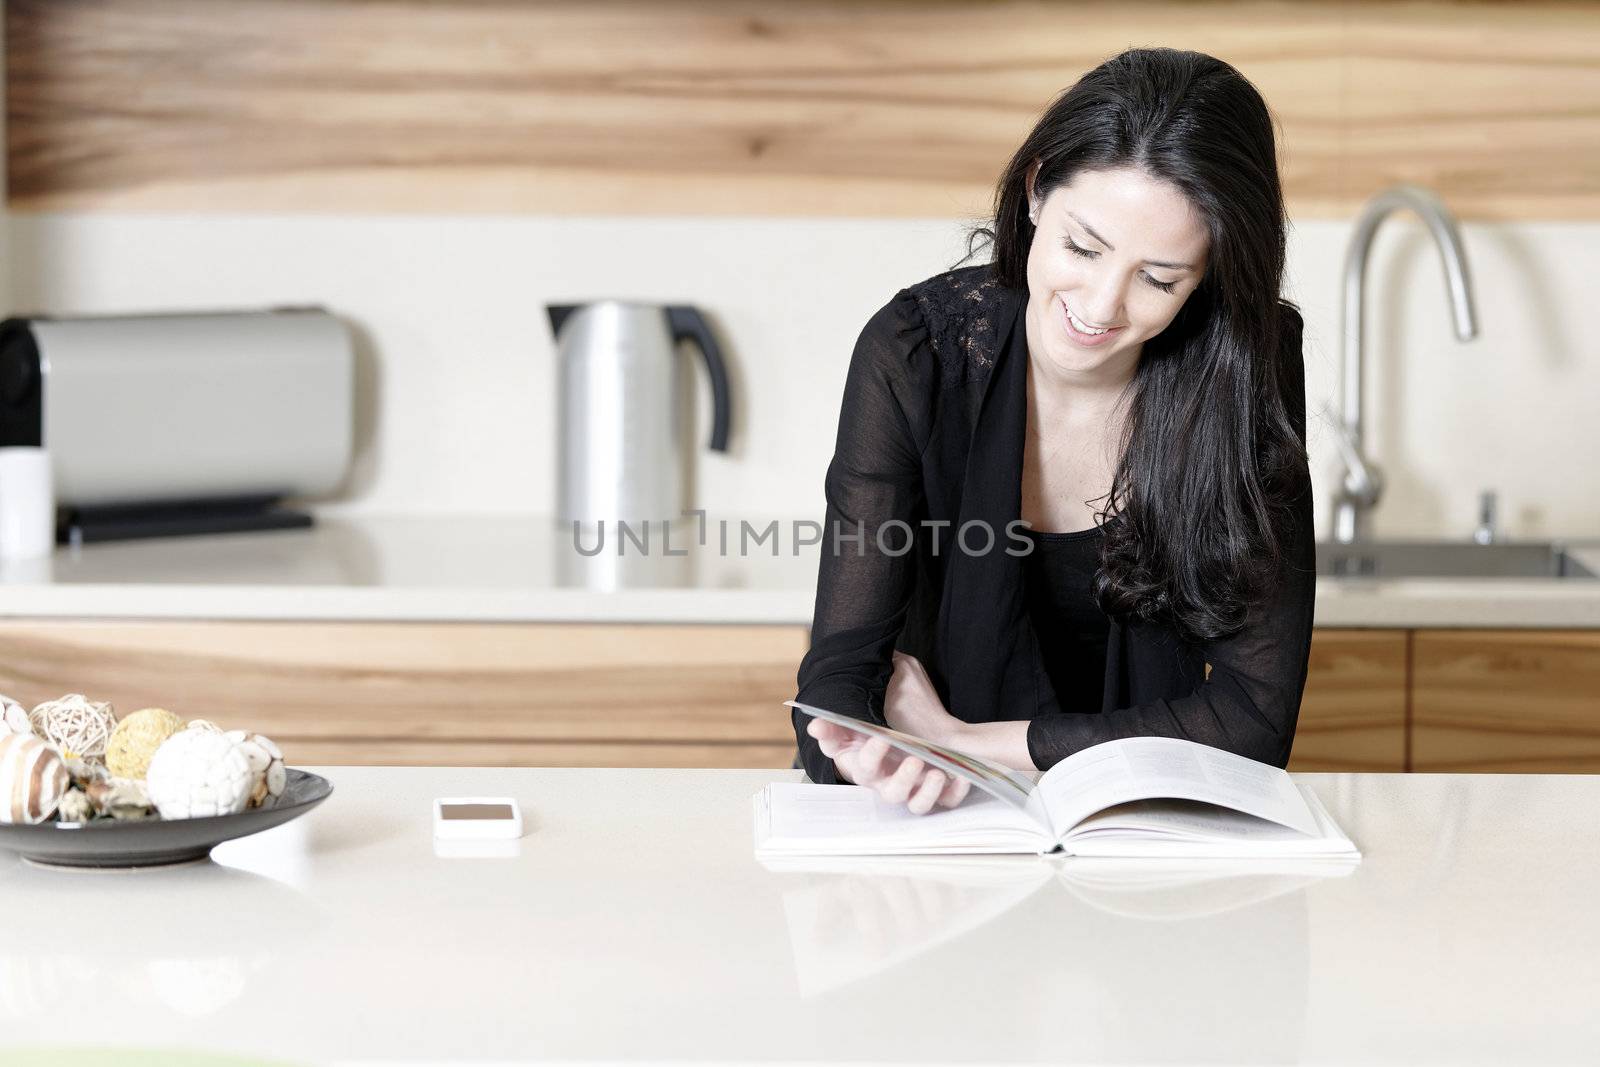 Woman reading recipe book by studiofi